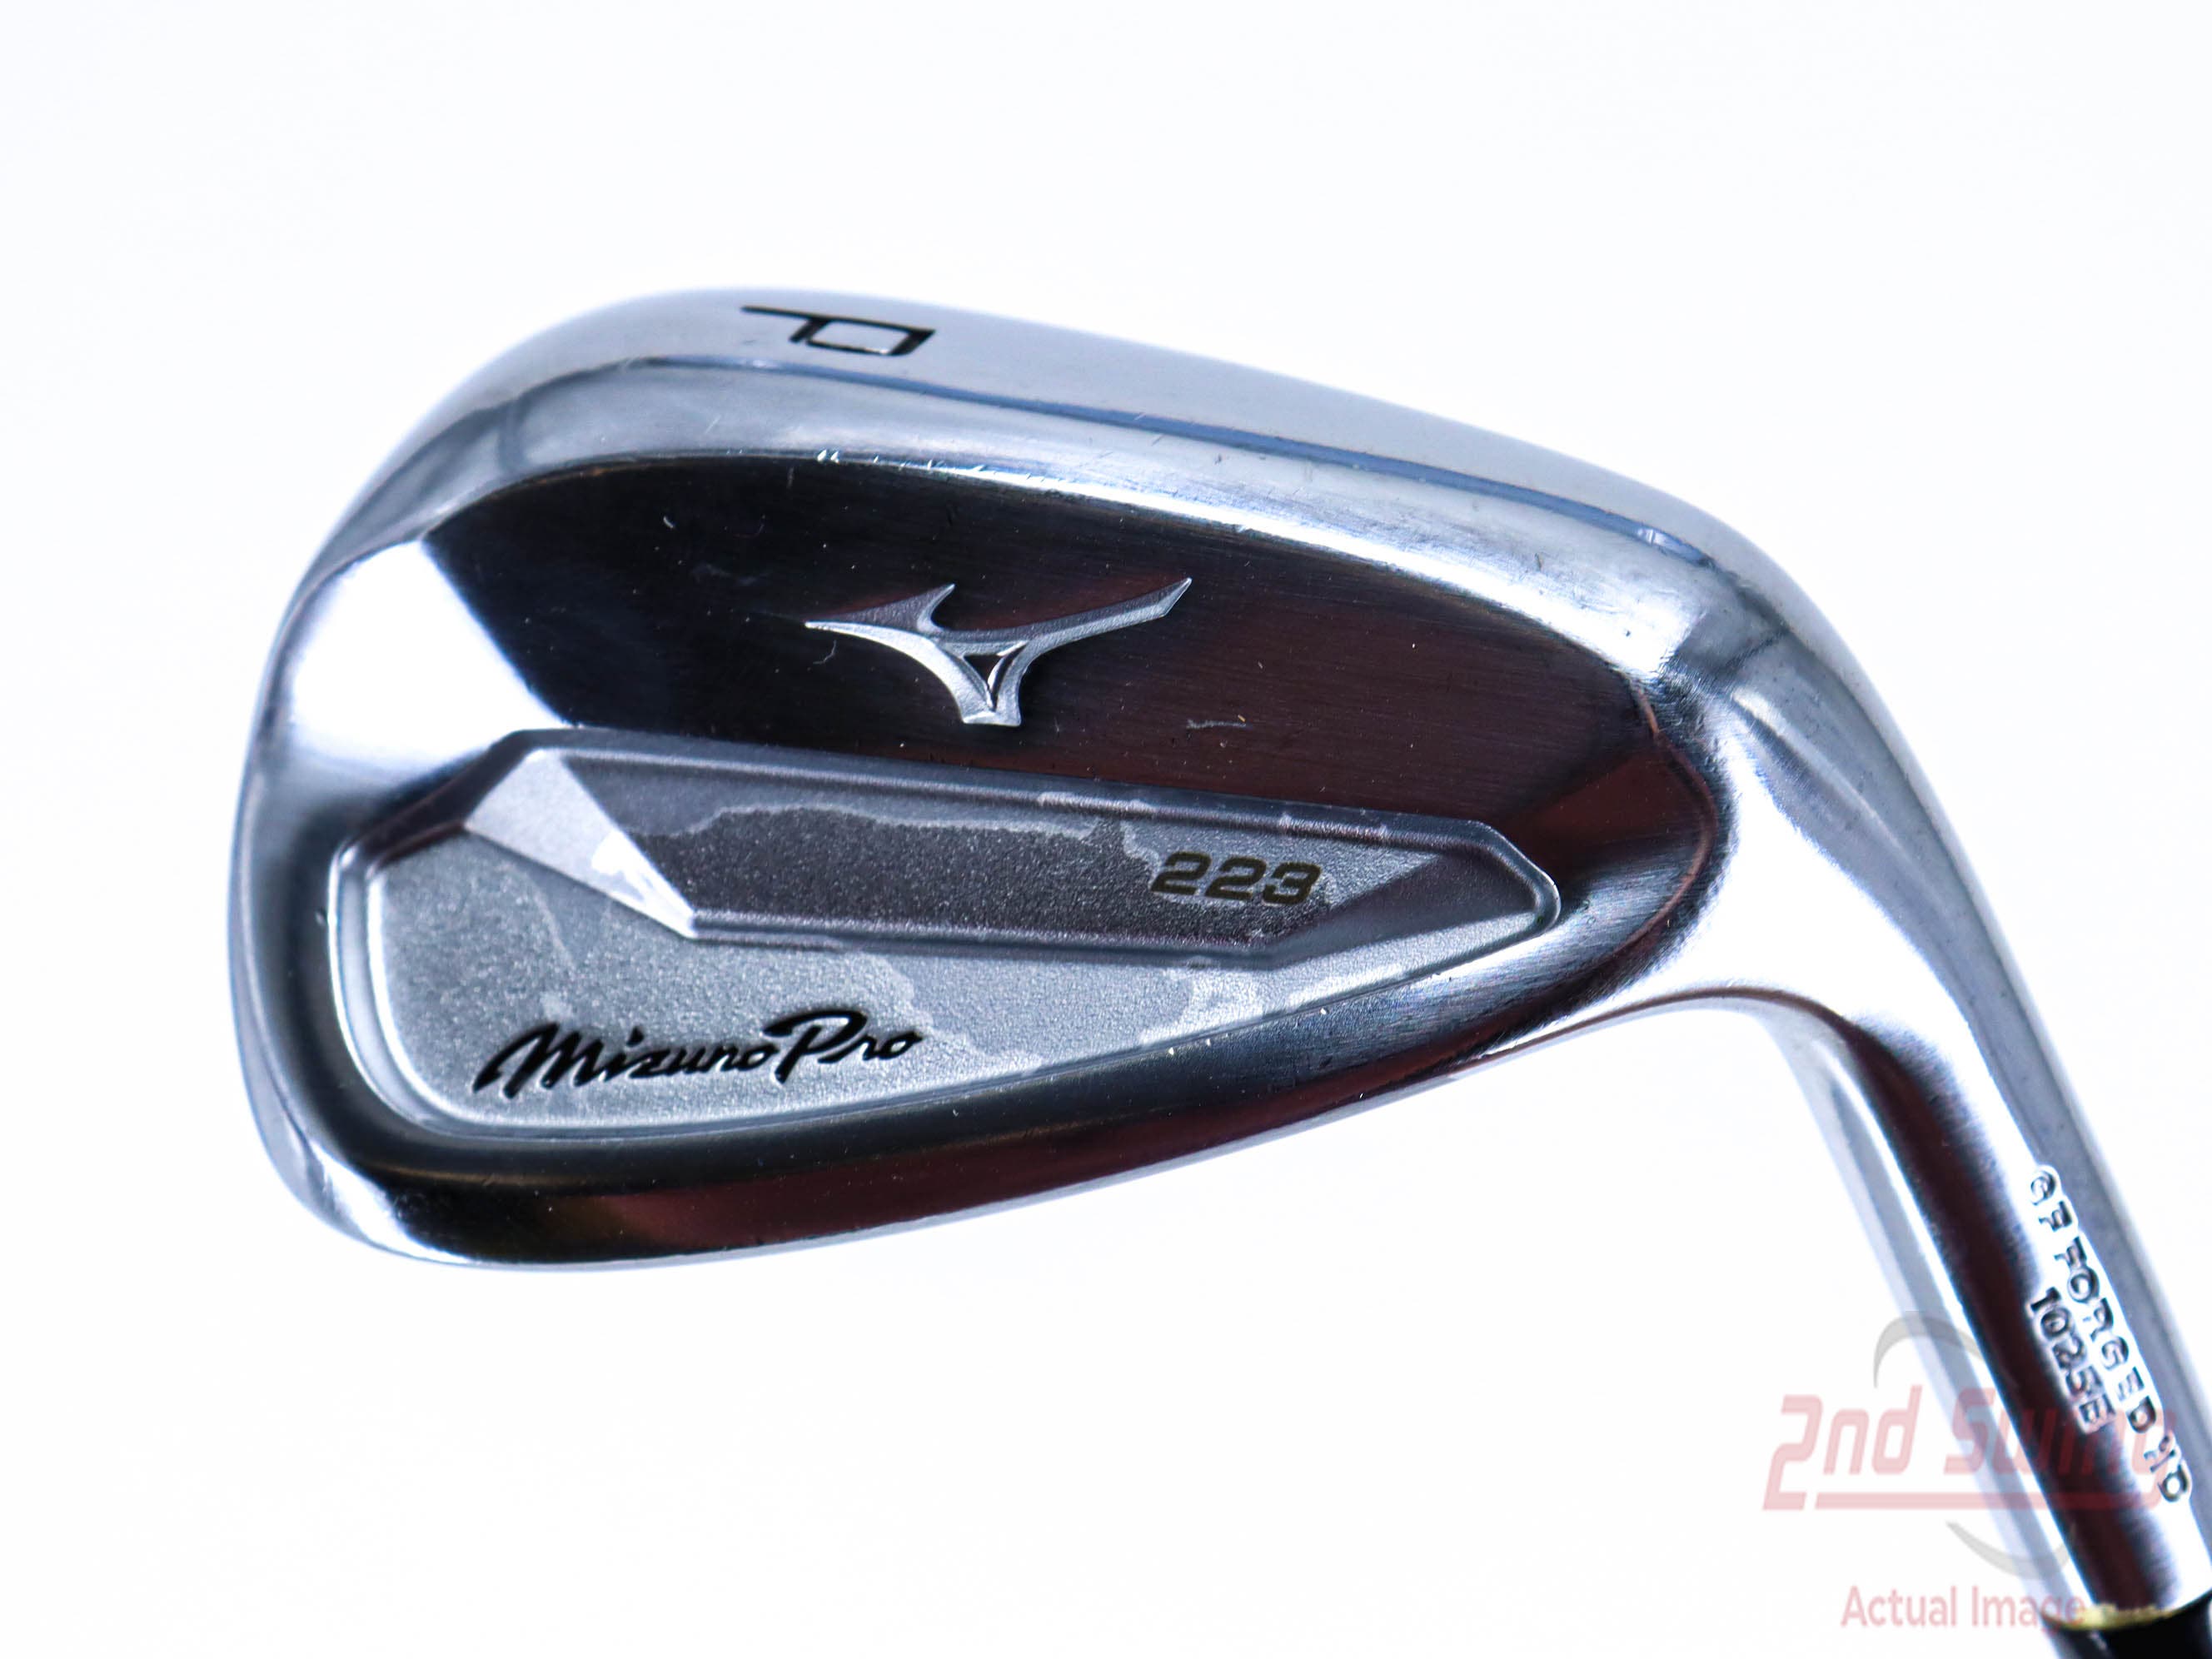 Mizuno Pro 223 Single Iron | 2nd Swing Golf